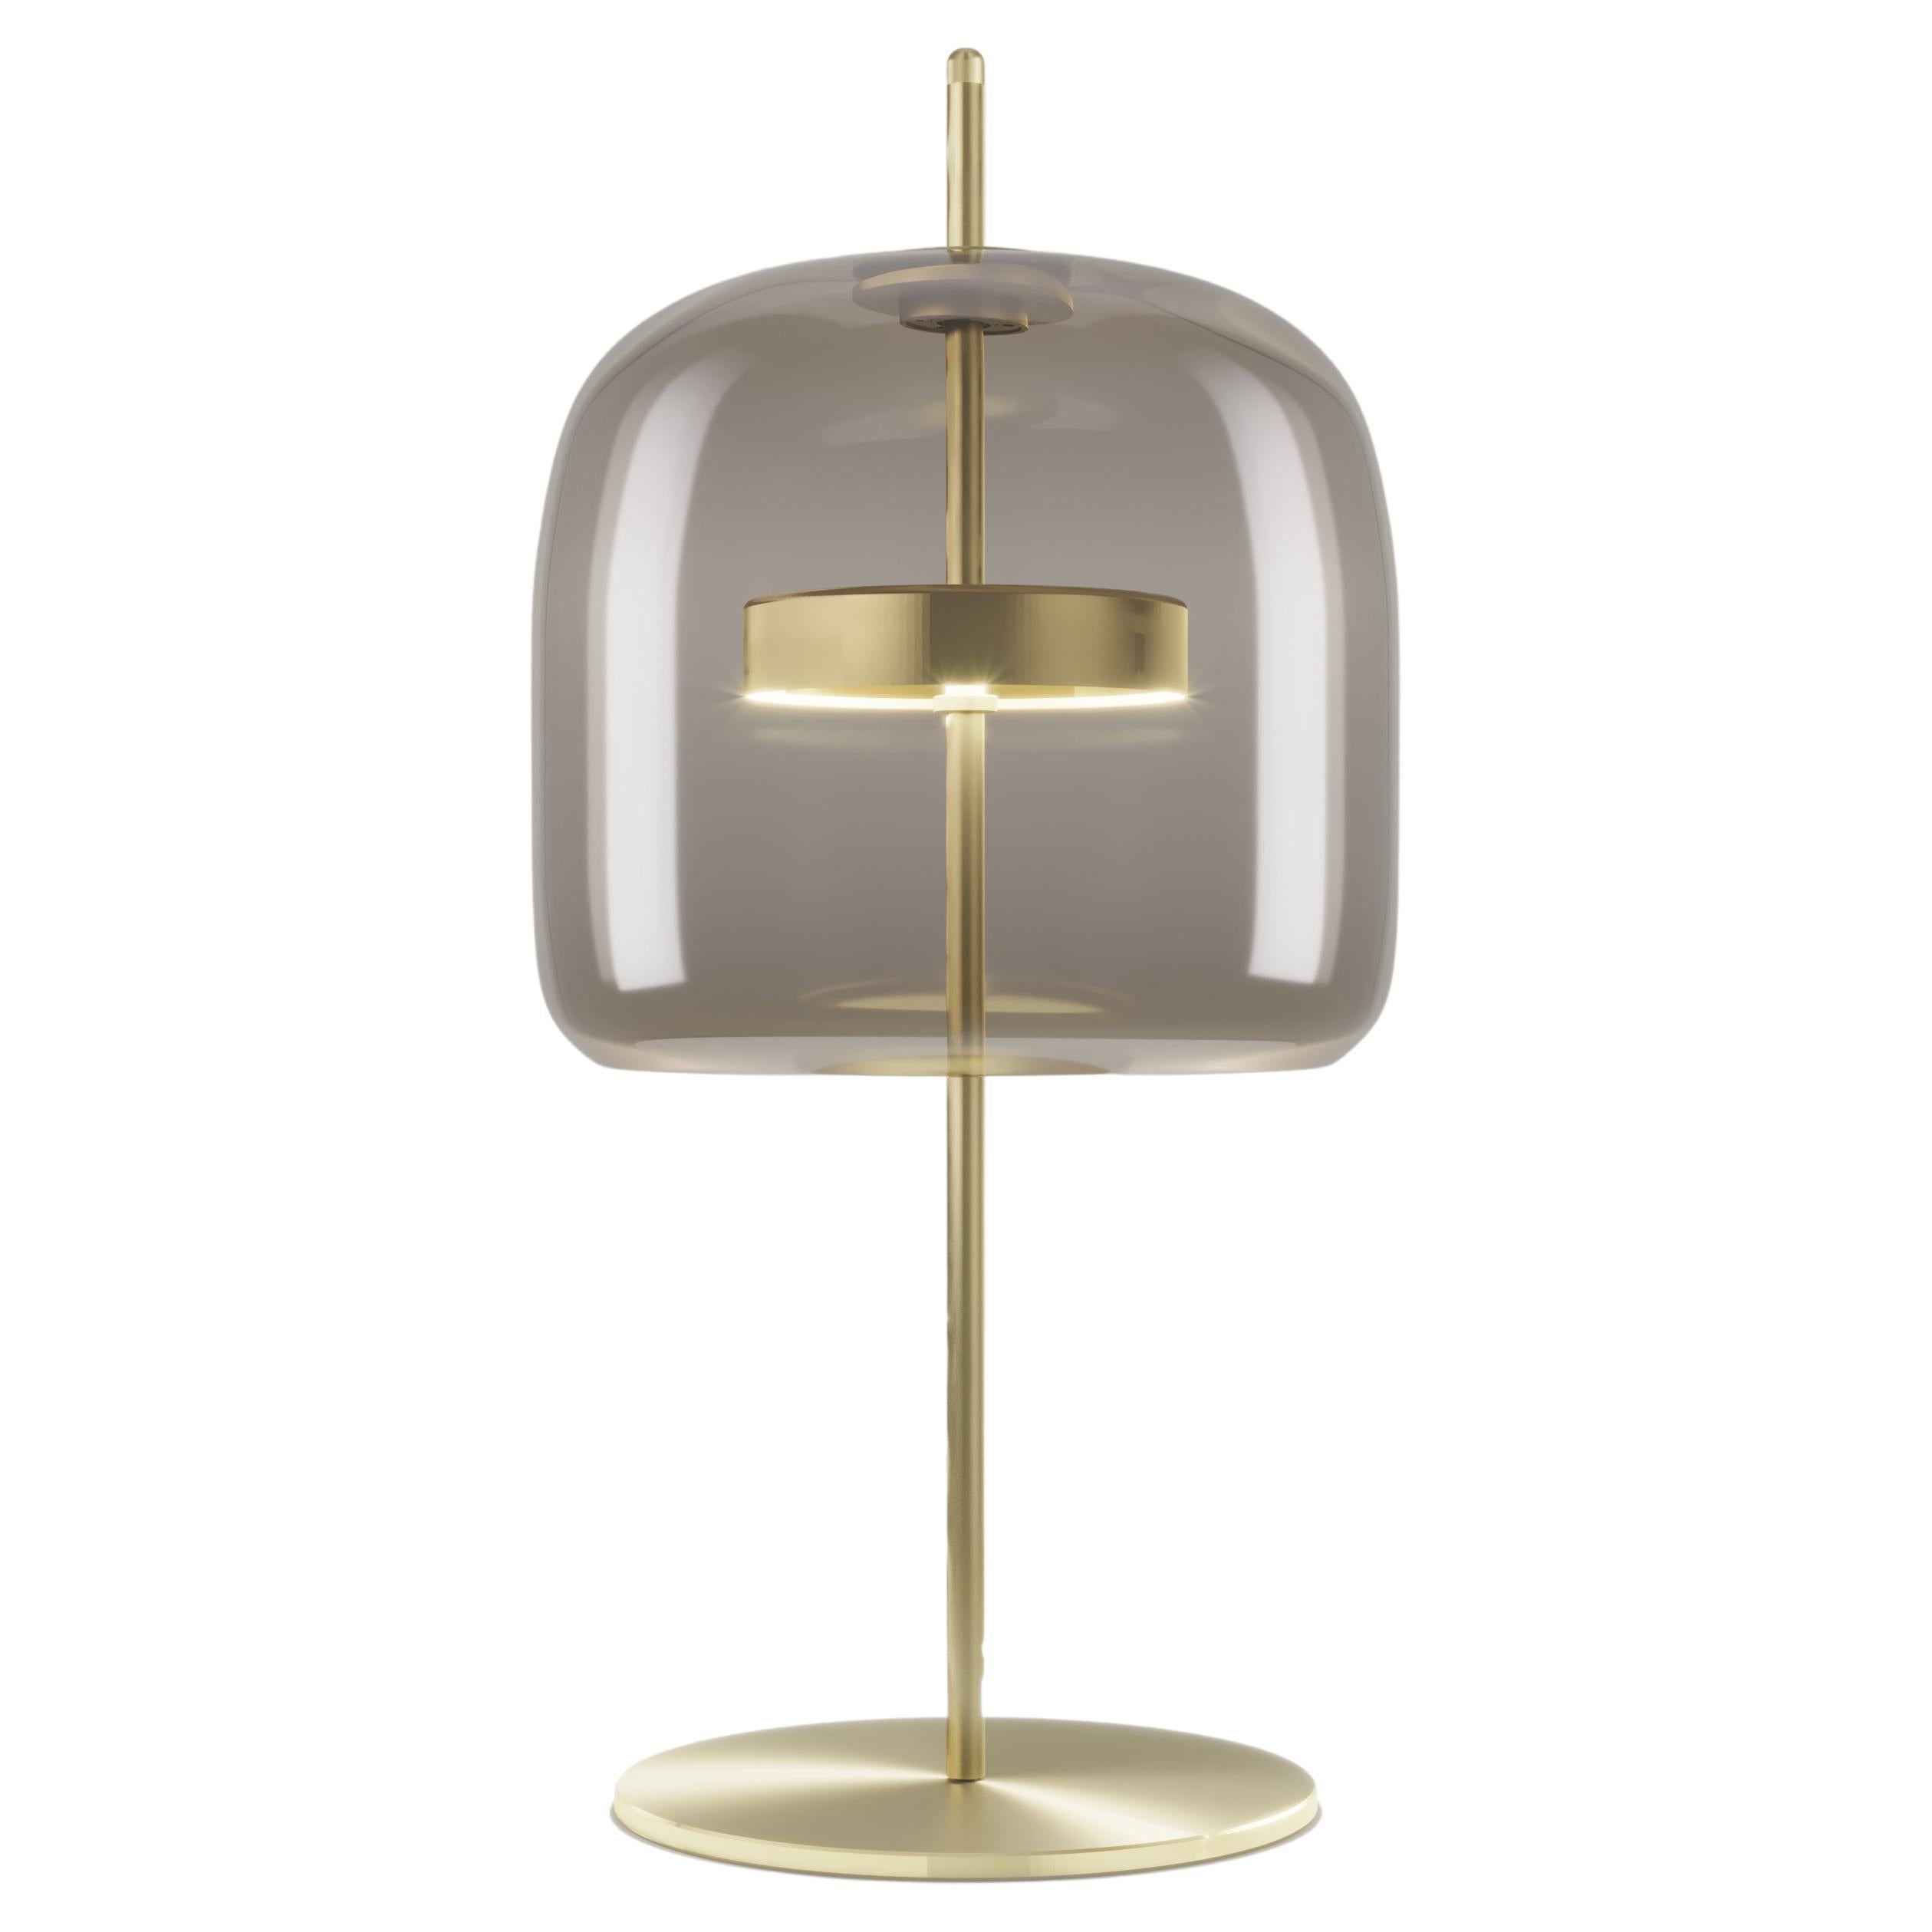 Vistosi Jube Table Lamp in Smoky Transparent Glass And Matt Gold Finish